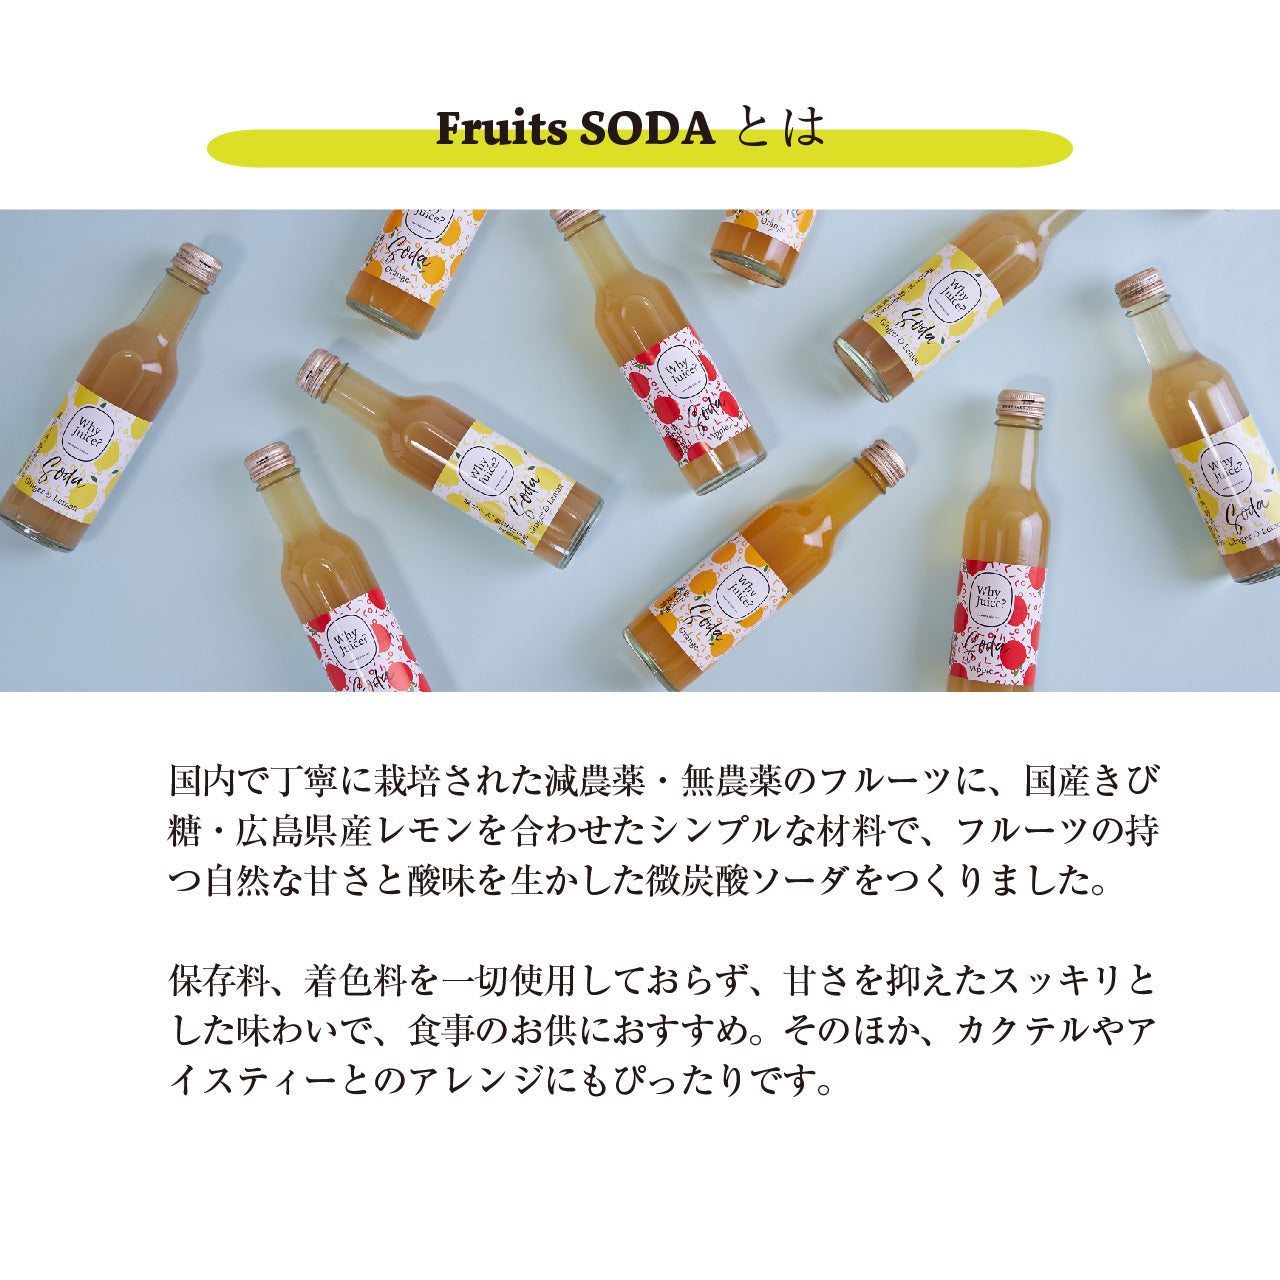 Fruits SODA 信州りんご (30本入)【減農薬・無農薬の果物と野菜】